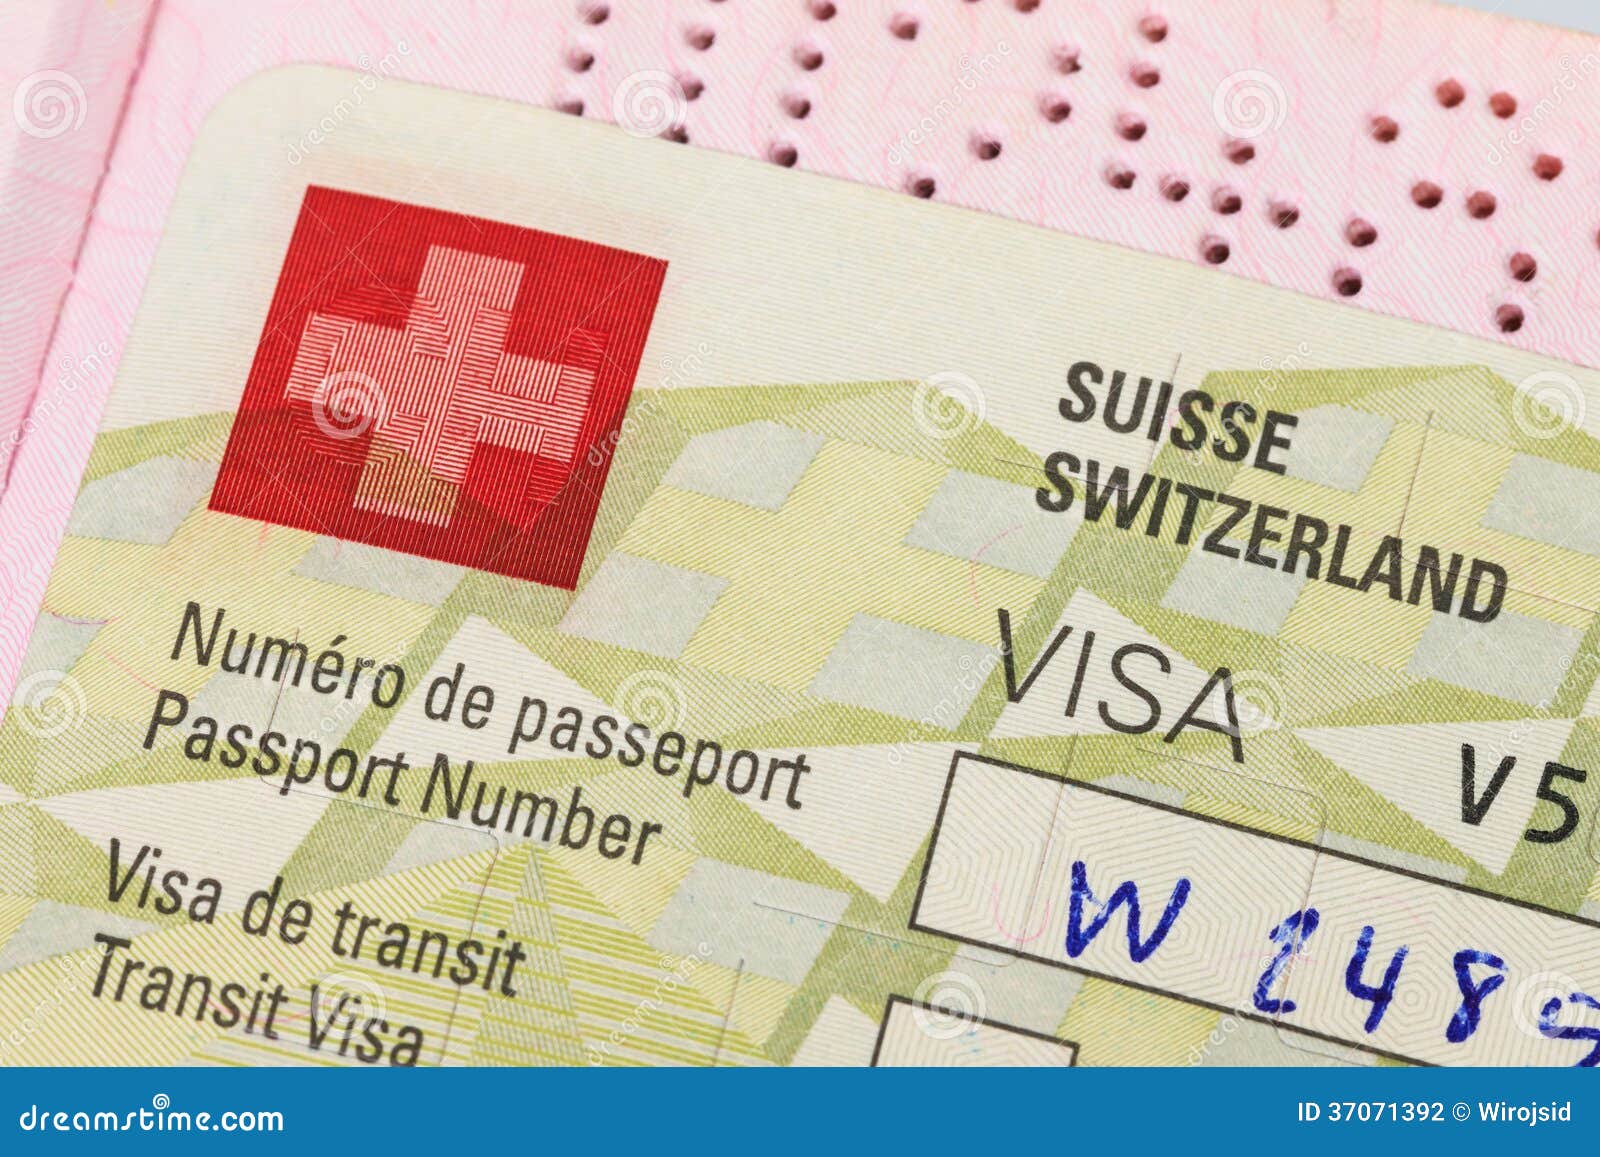 dosar visa schengen suisse anti aging)